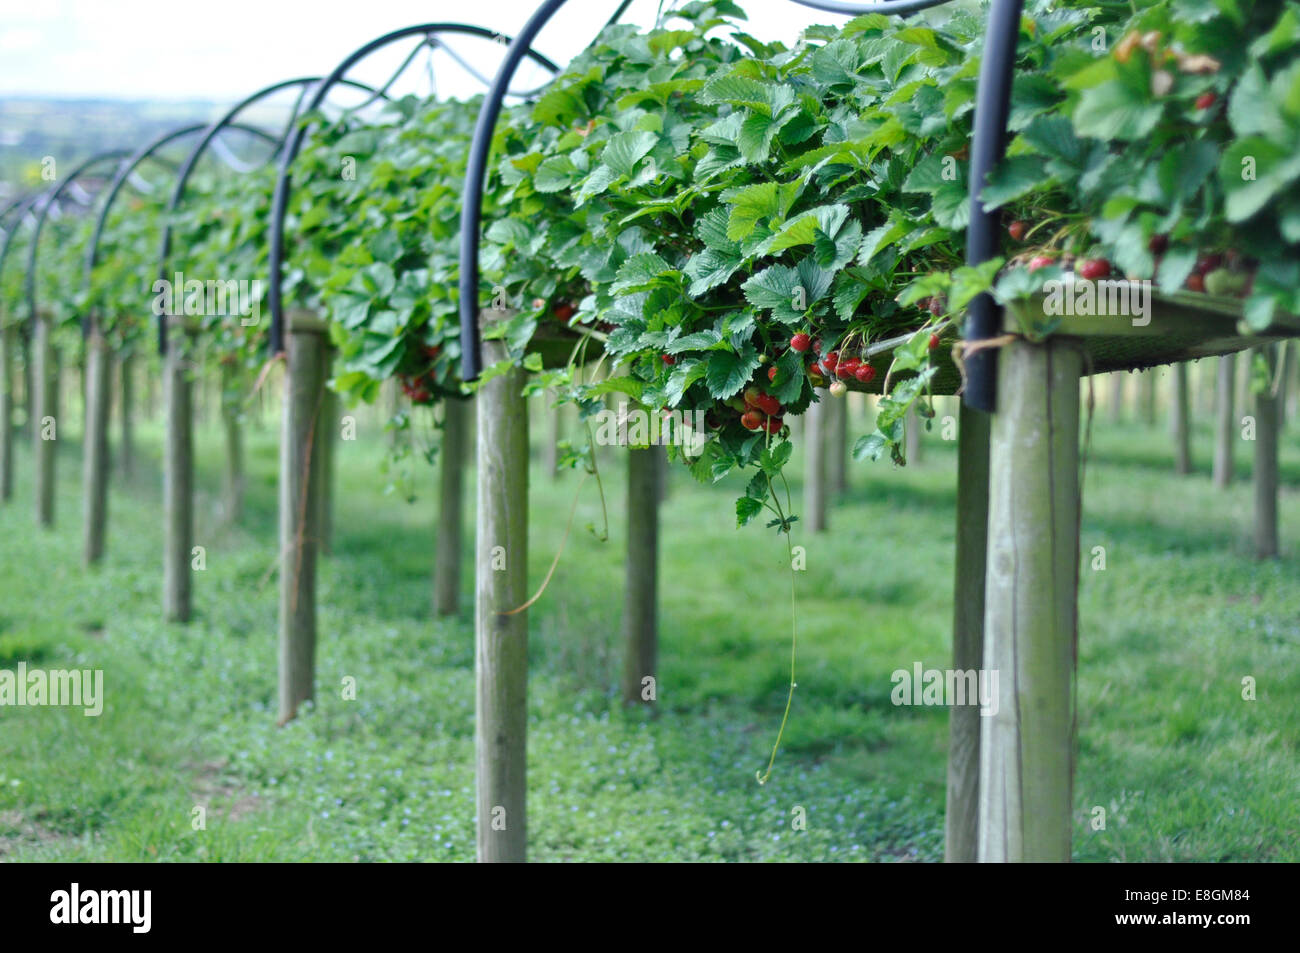 Rows of strawberry plants at strawberry farm Stock Photo